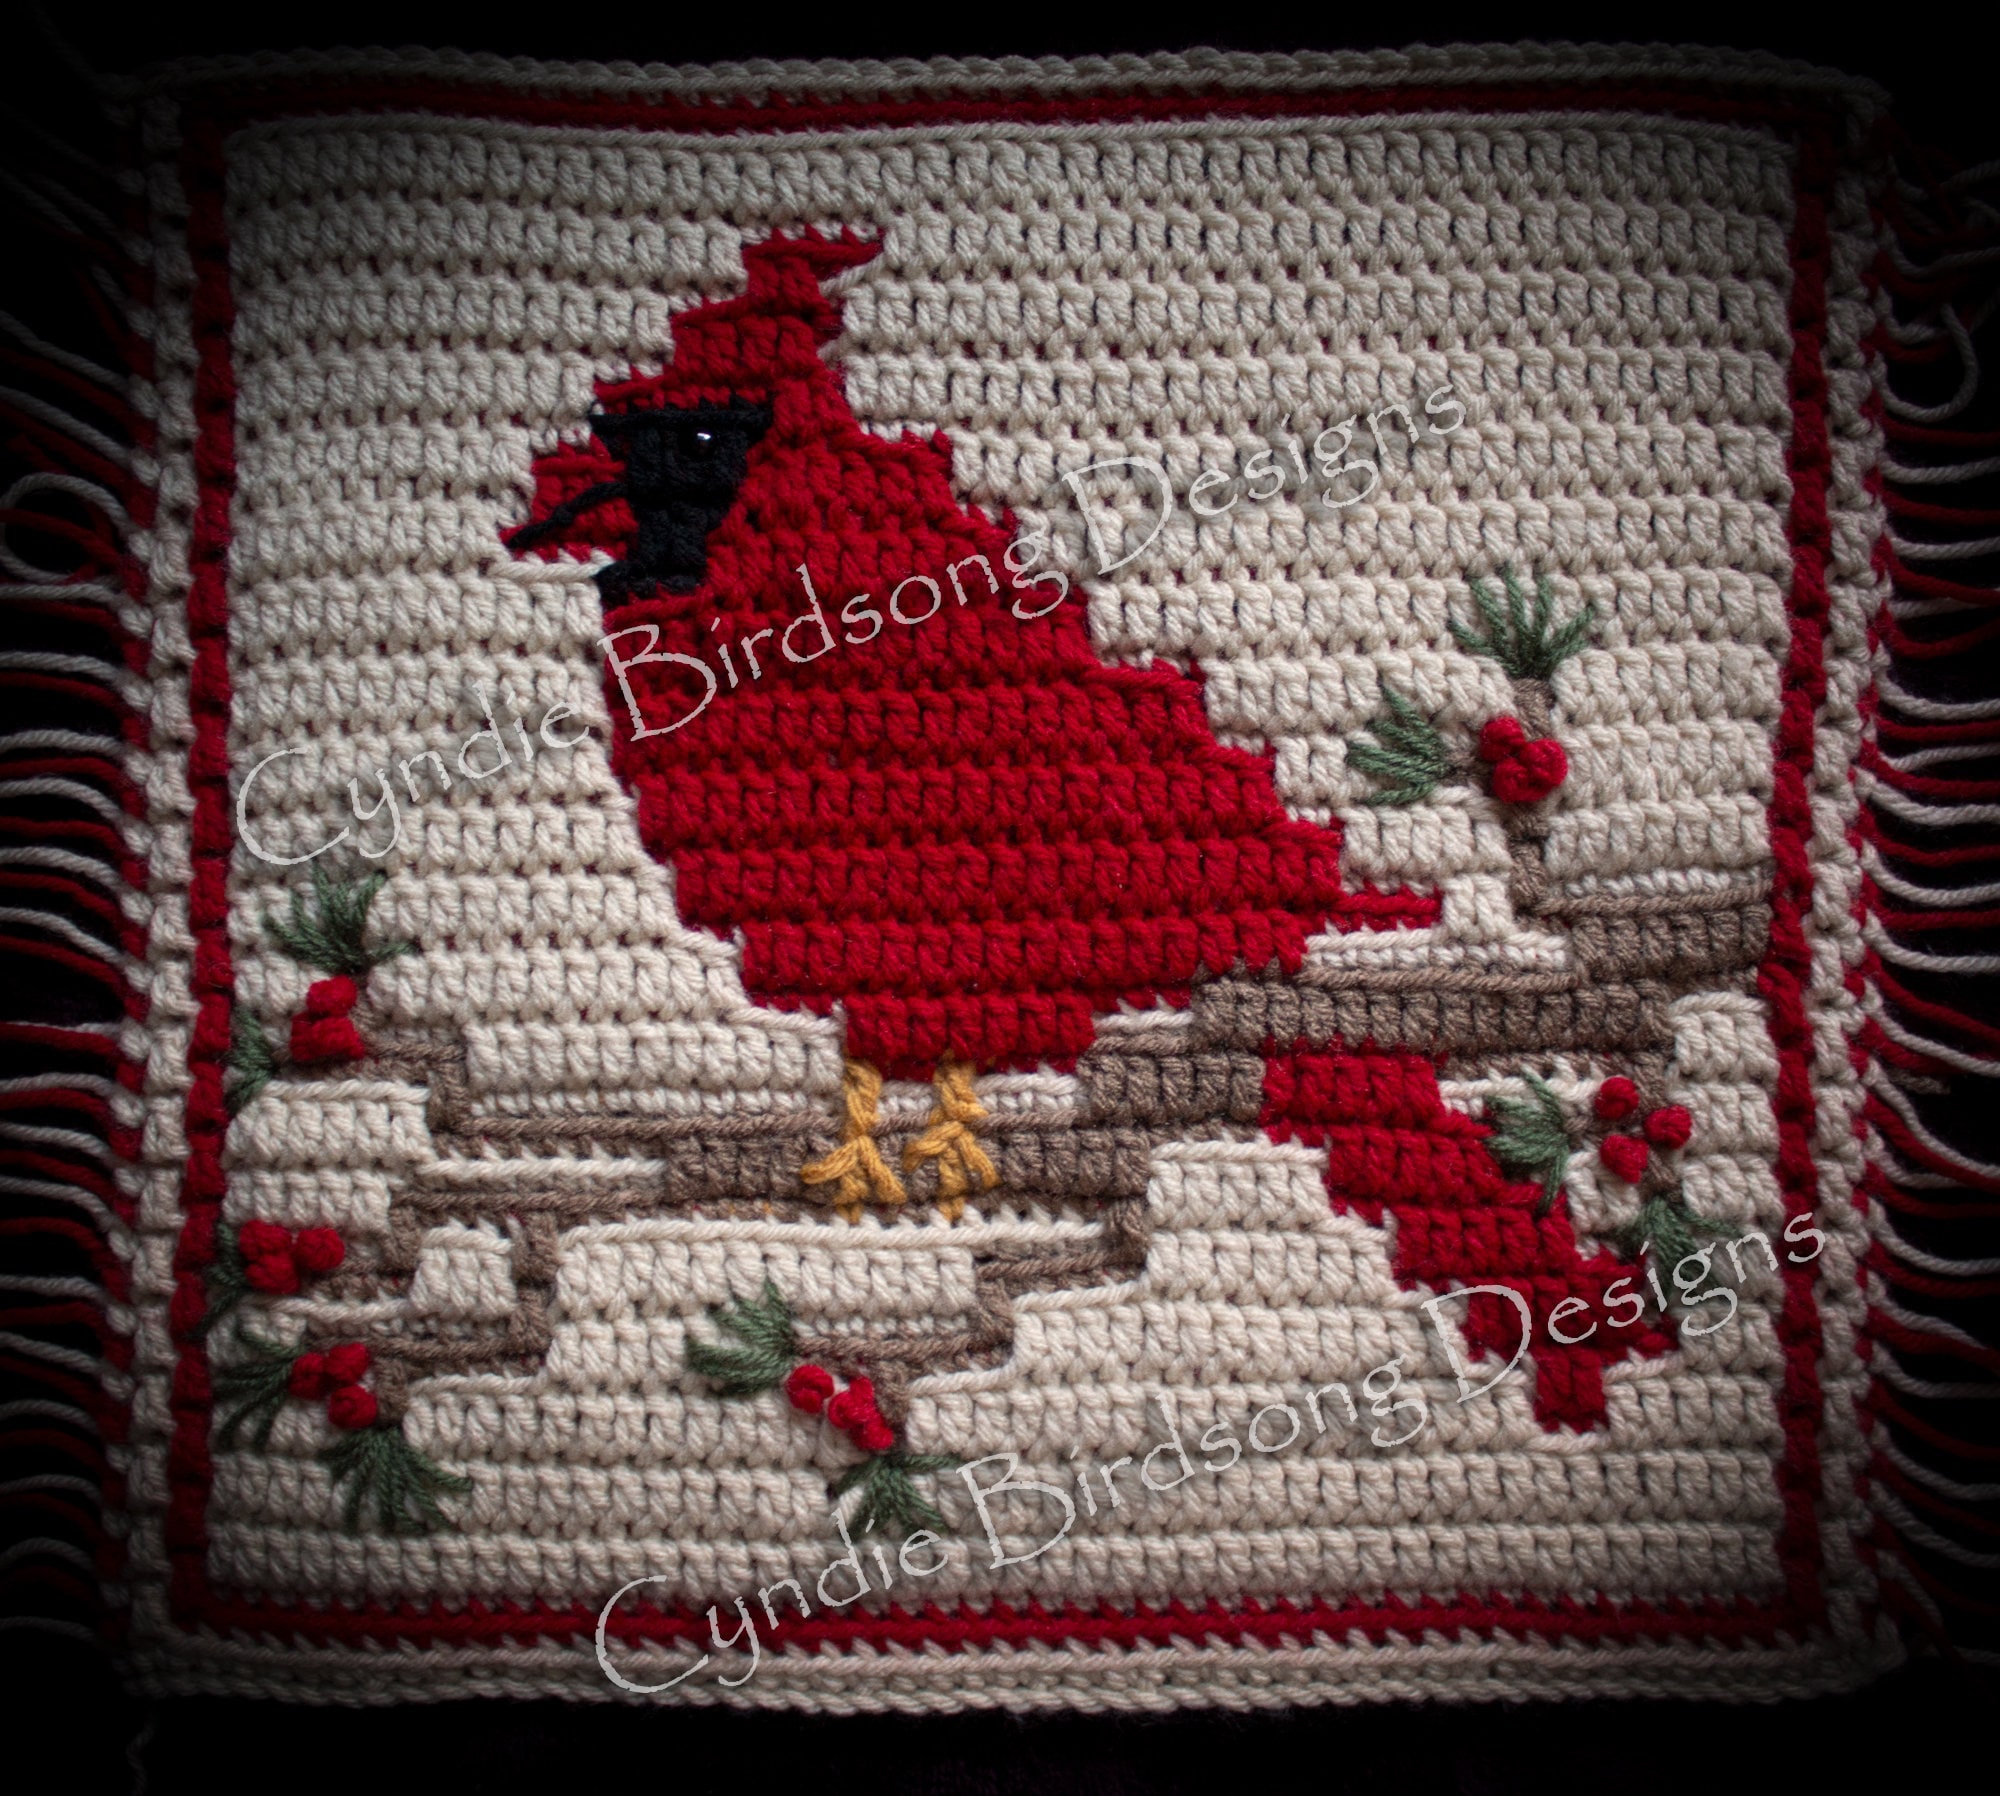 Woodland Mosaic Crochet Square - Fluffy Fox Crochet pattern by Cyndie  Birdsong